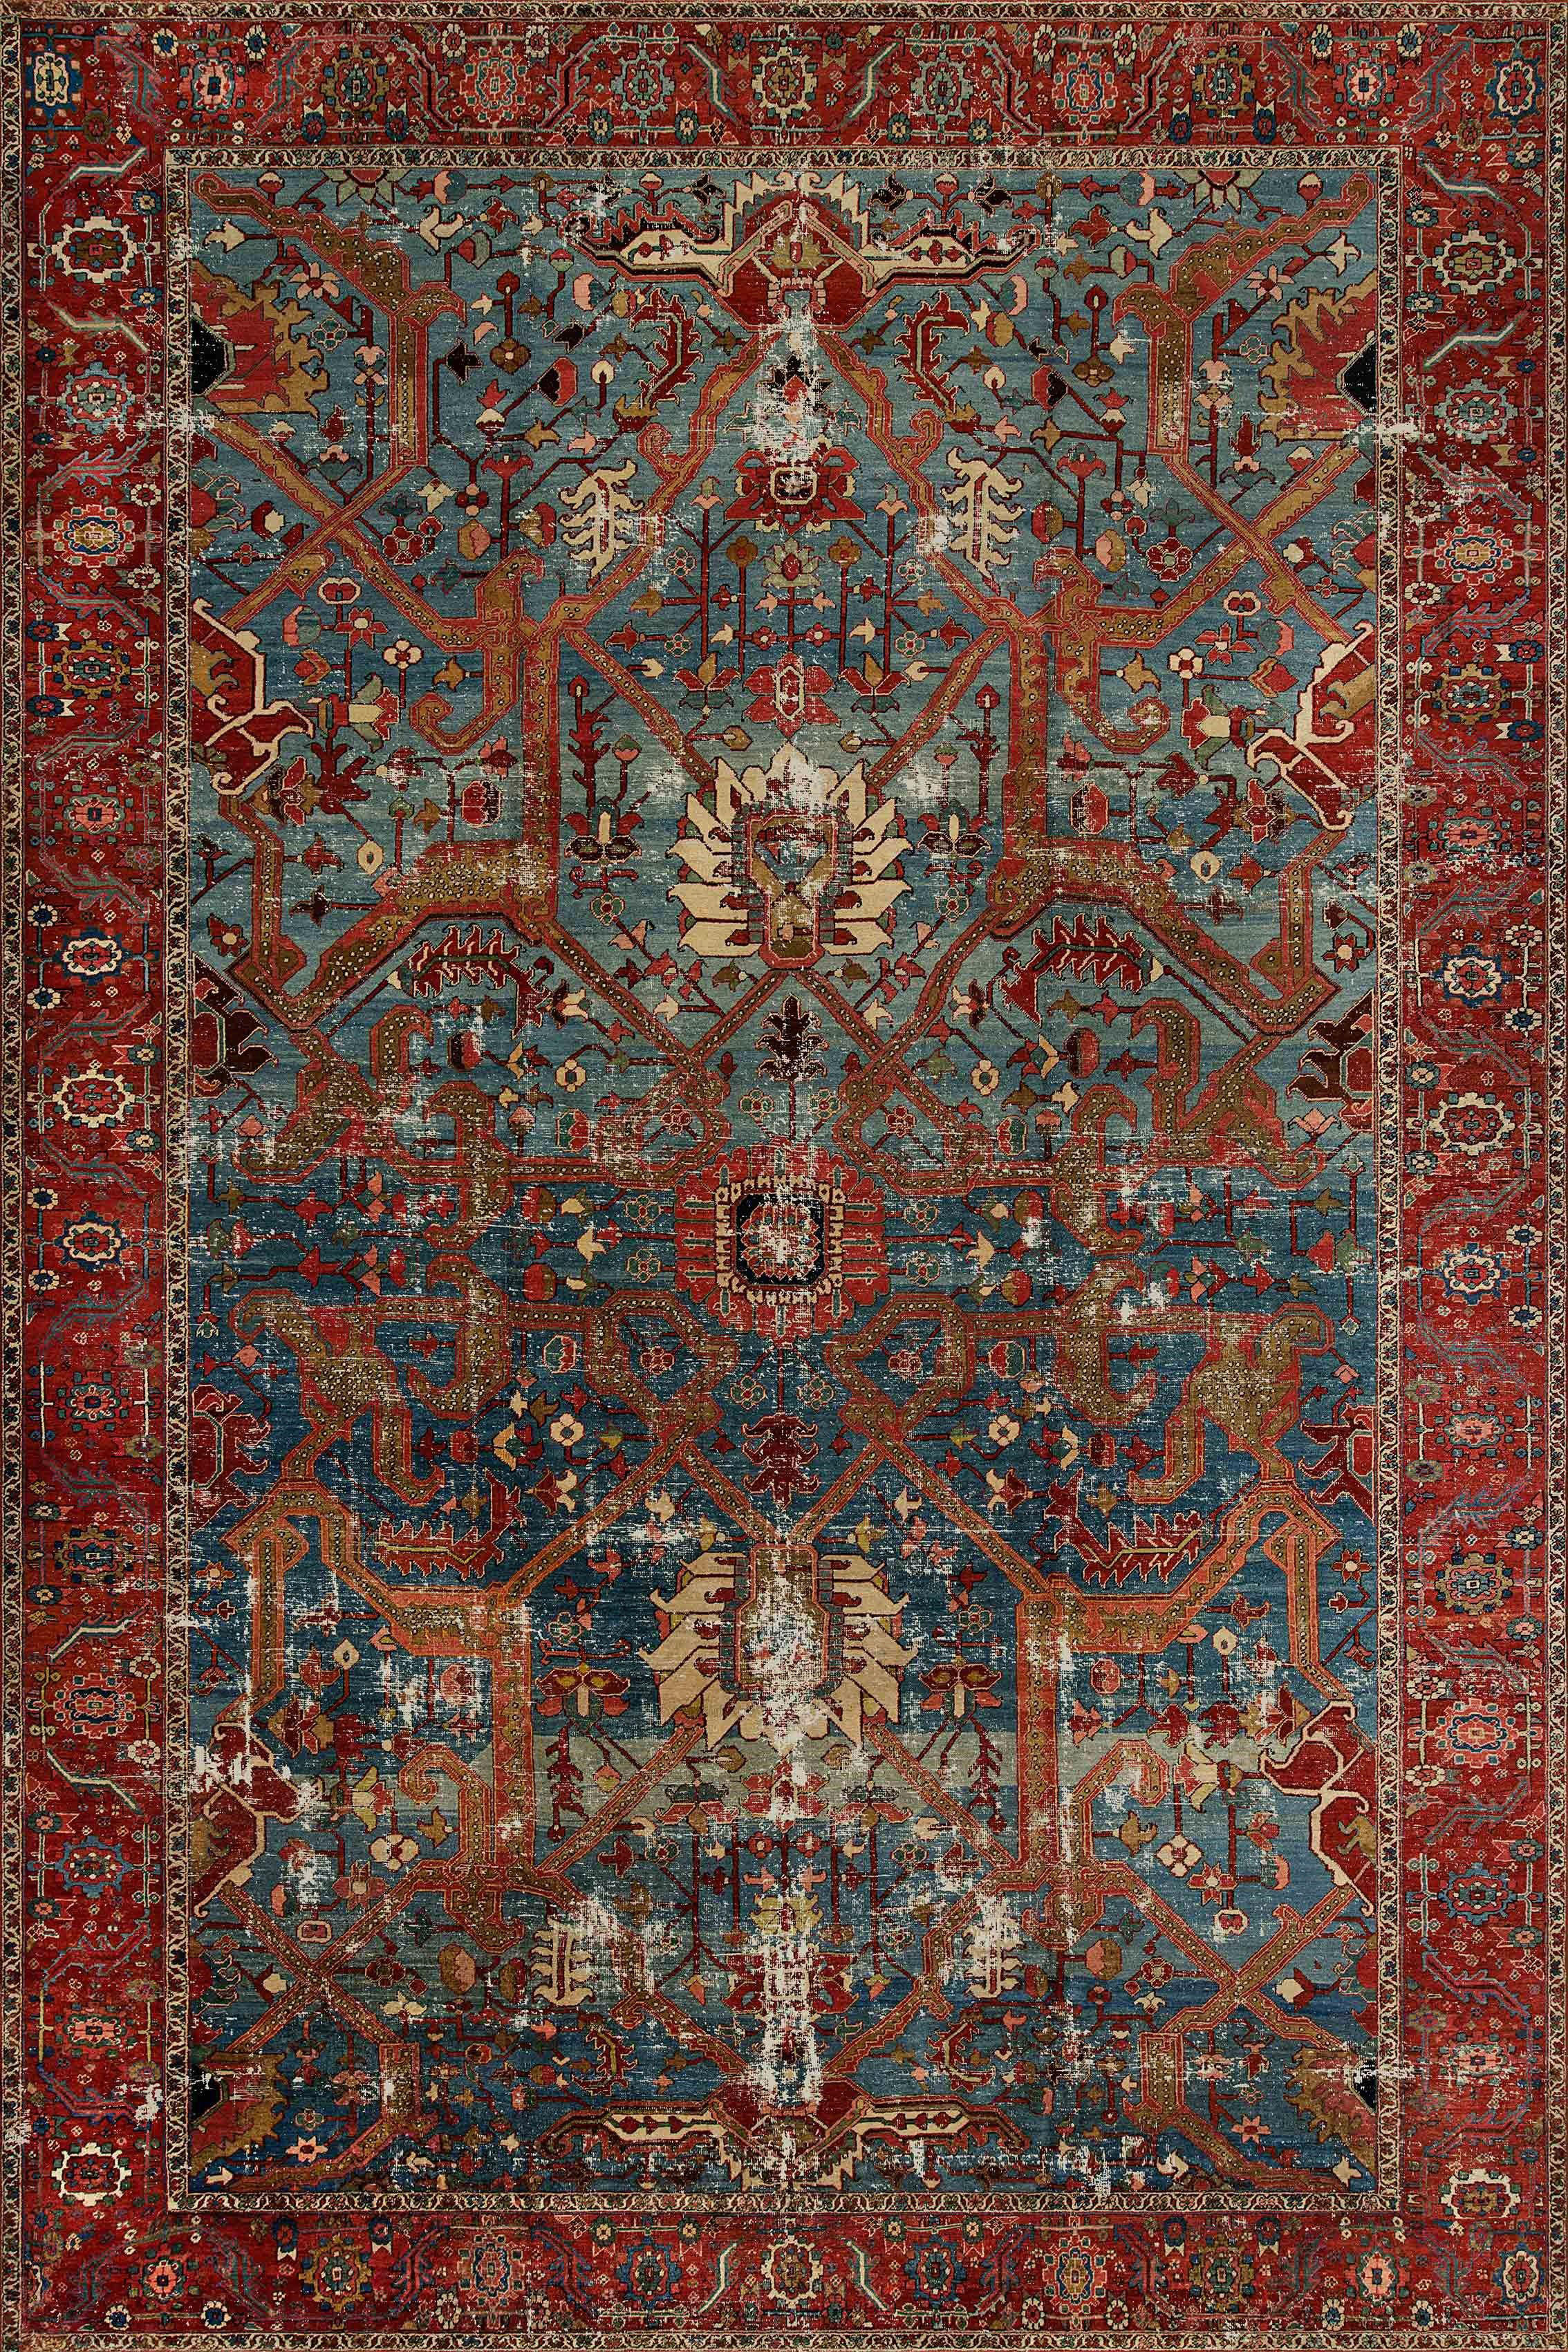 VINTAGE-TEPPICH  130/190 cm  Blau, Rot   - Blau/Rot, LIFESTYLE, Textil (130/190cm) - Novel